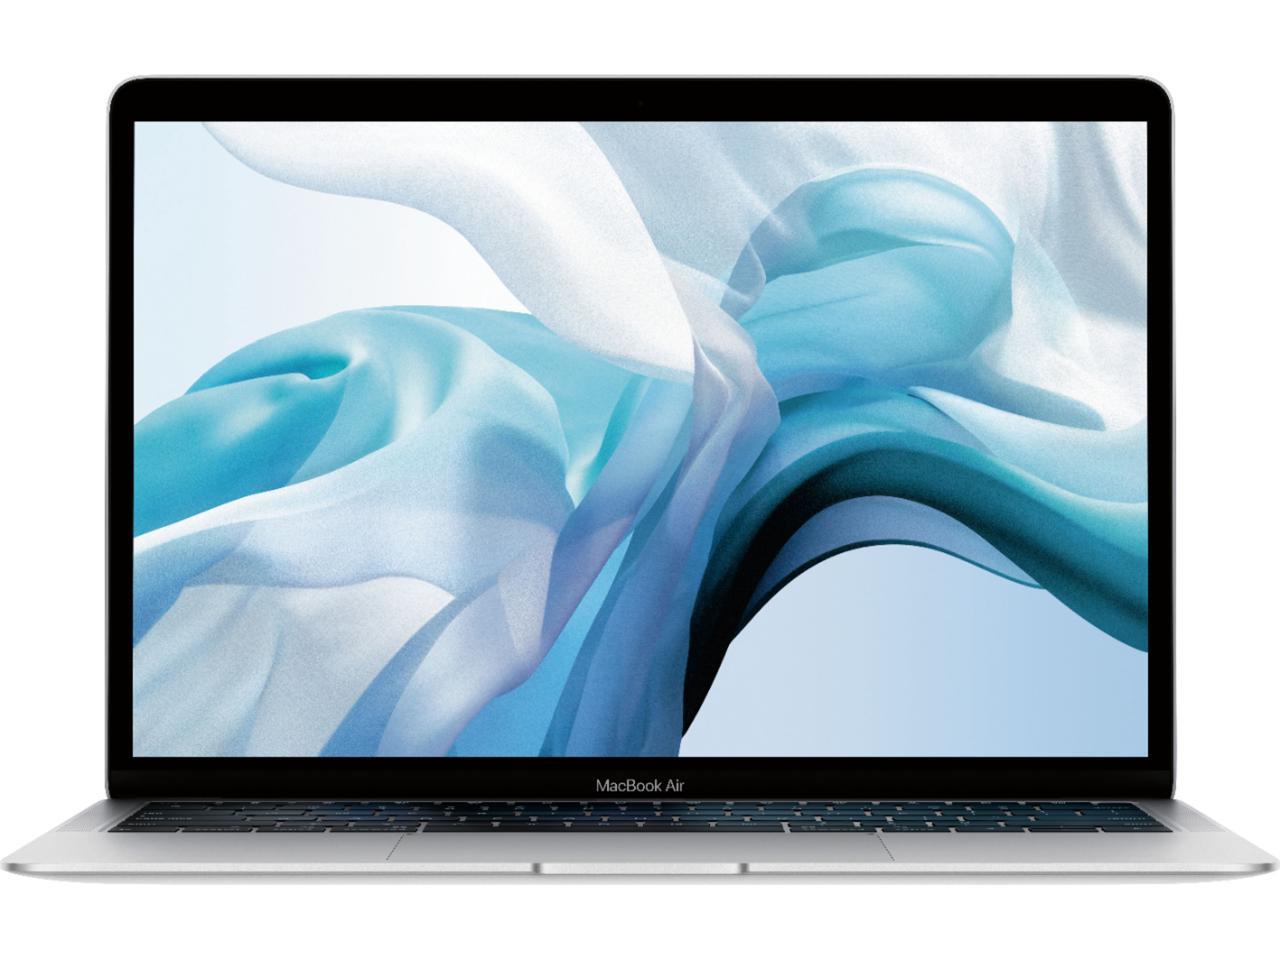 adobe premiere with macbook 2017 i5